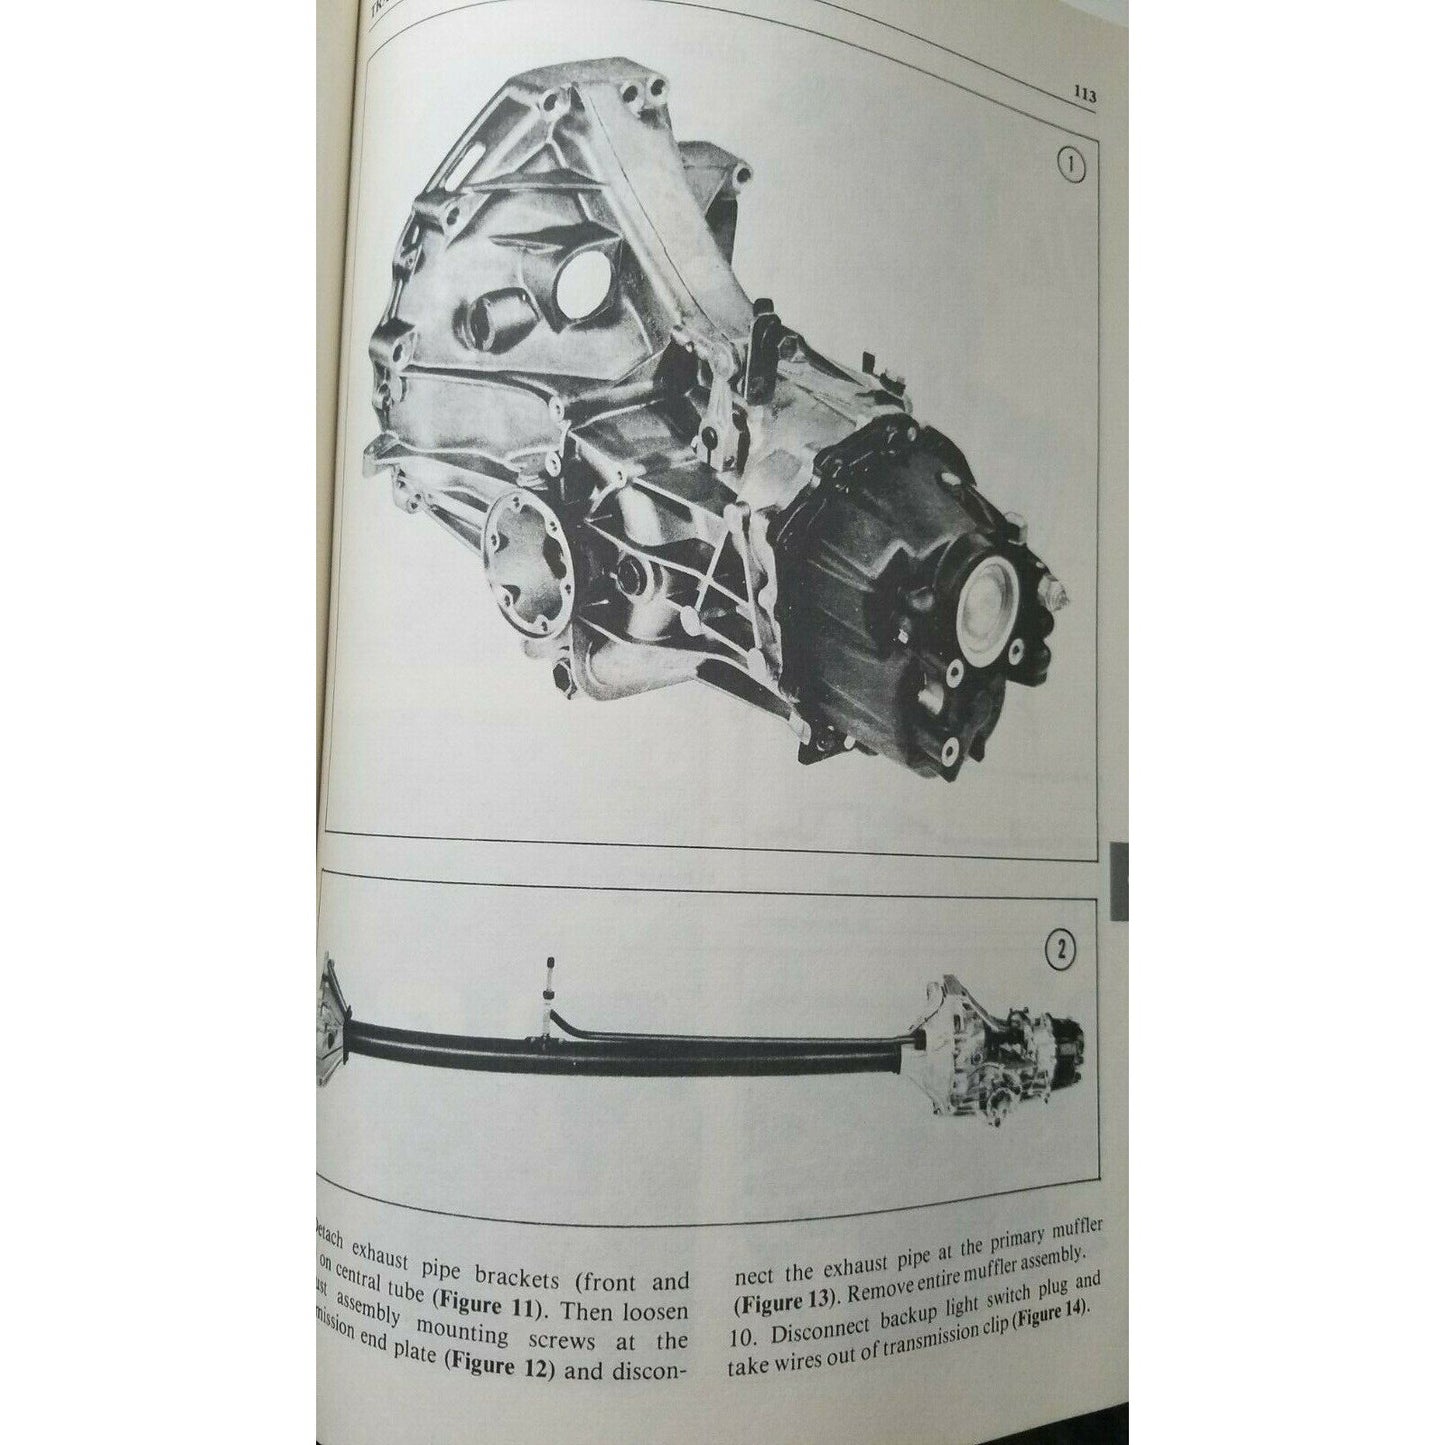 1976-78  Clymer Publication Porsche Service Repair Handbook 924 Series